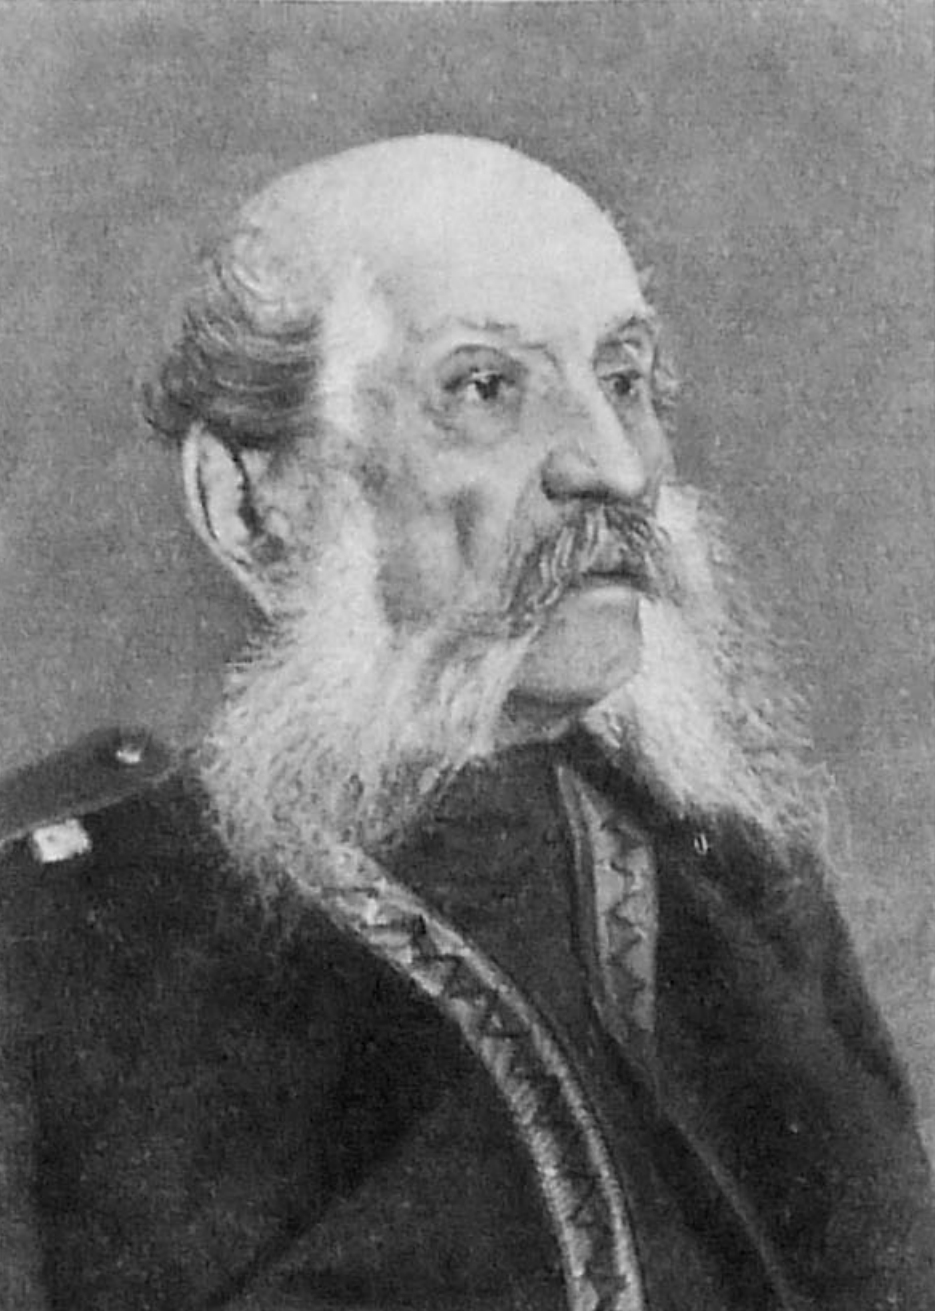 Богданович Евгений Васильевич